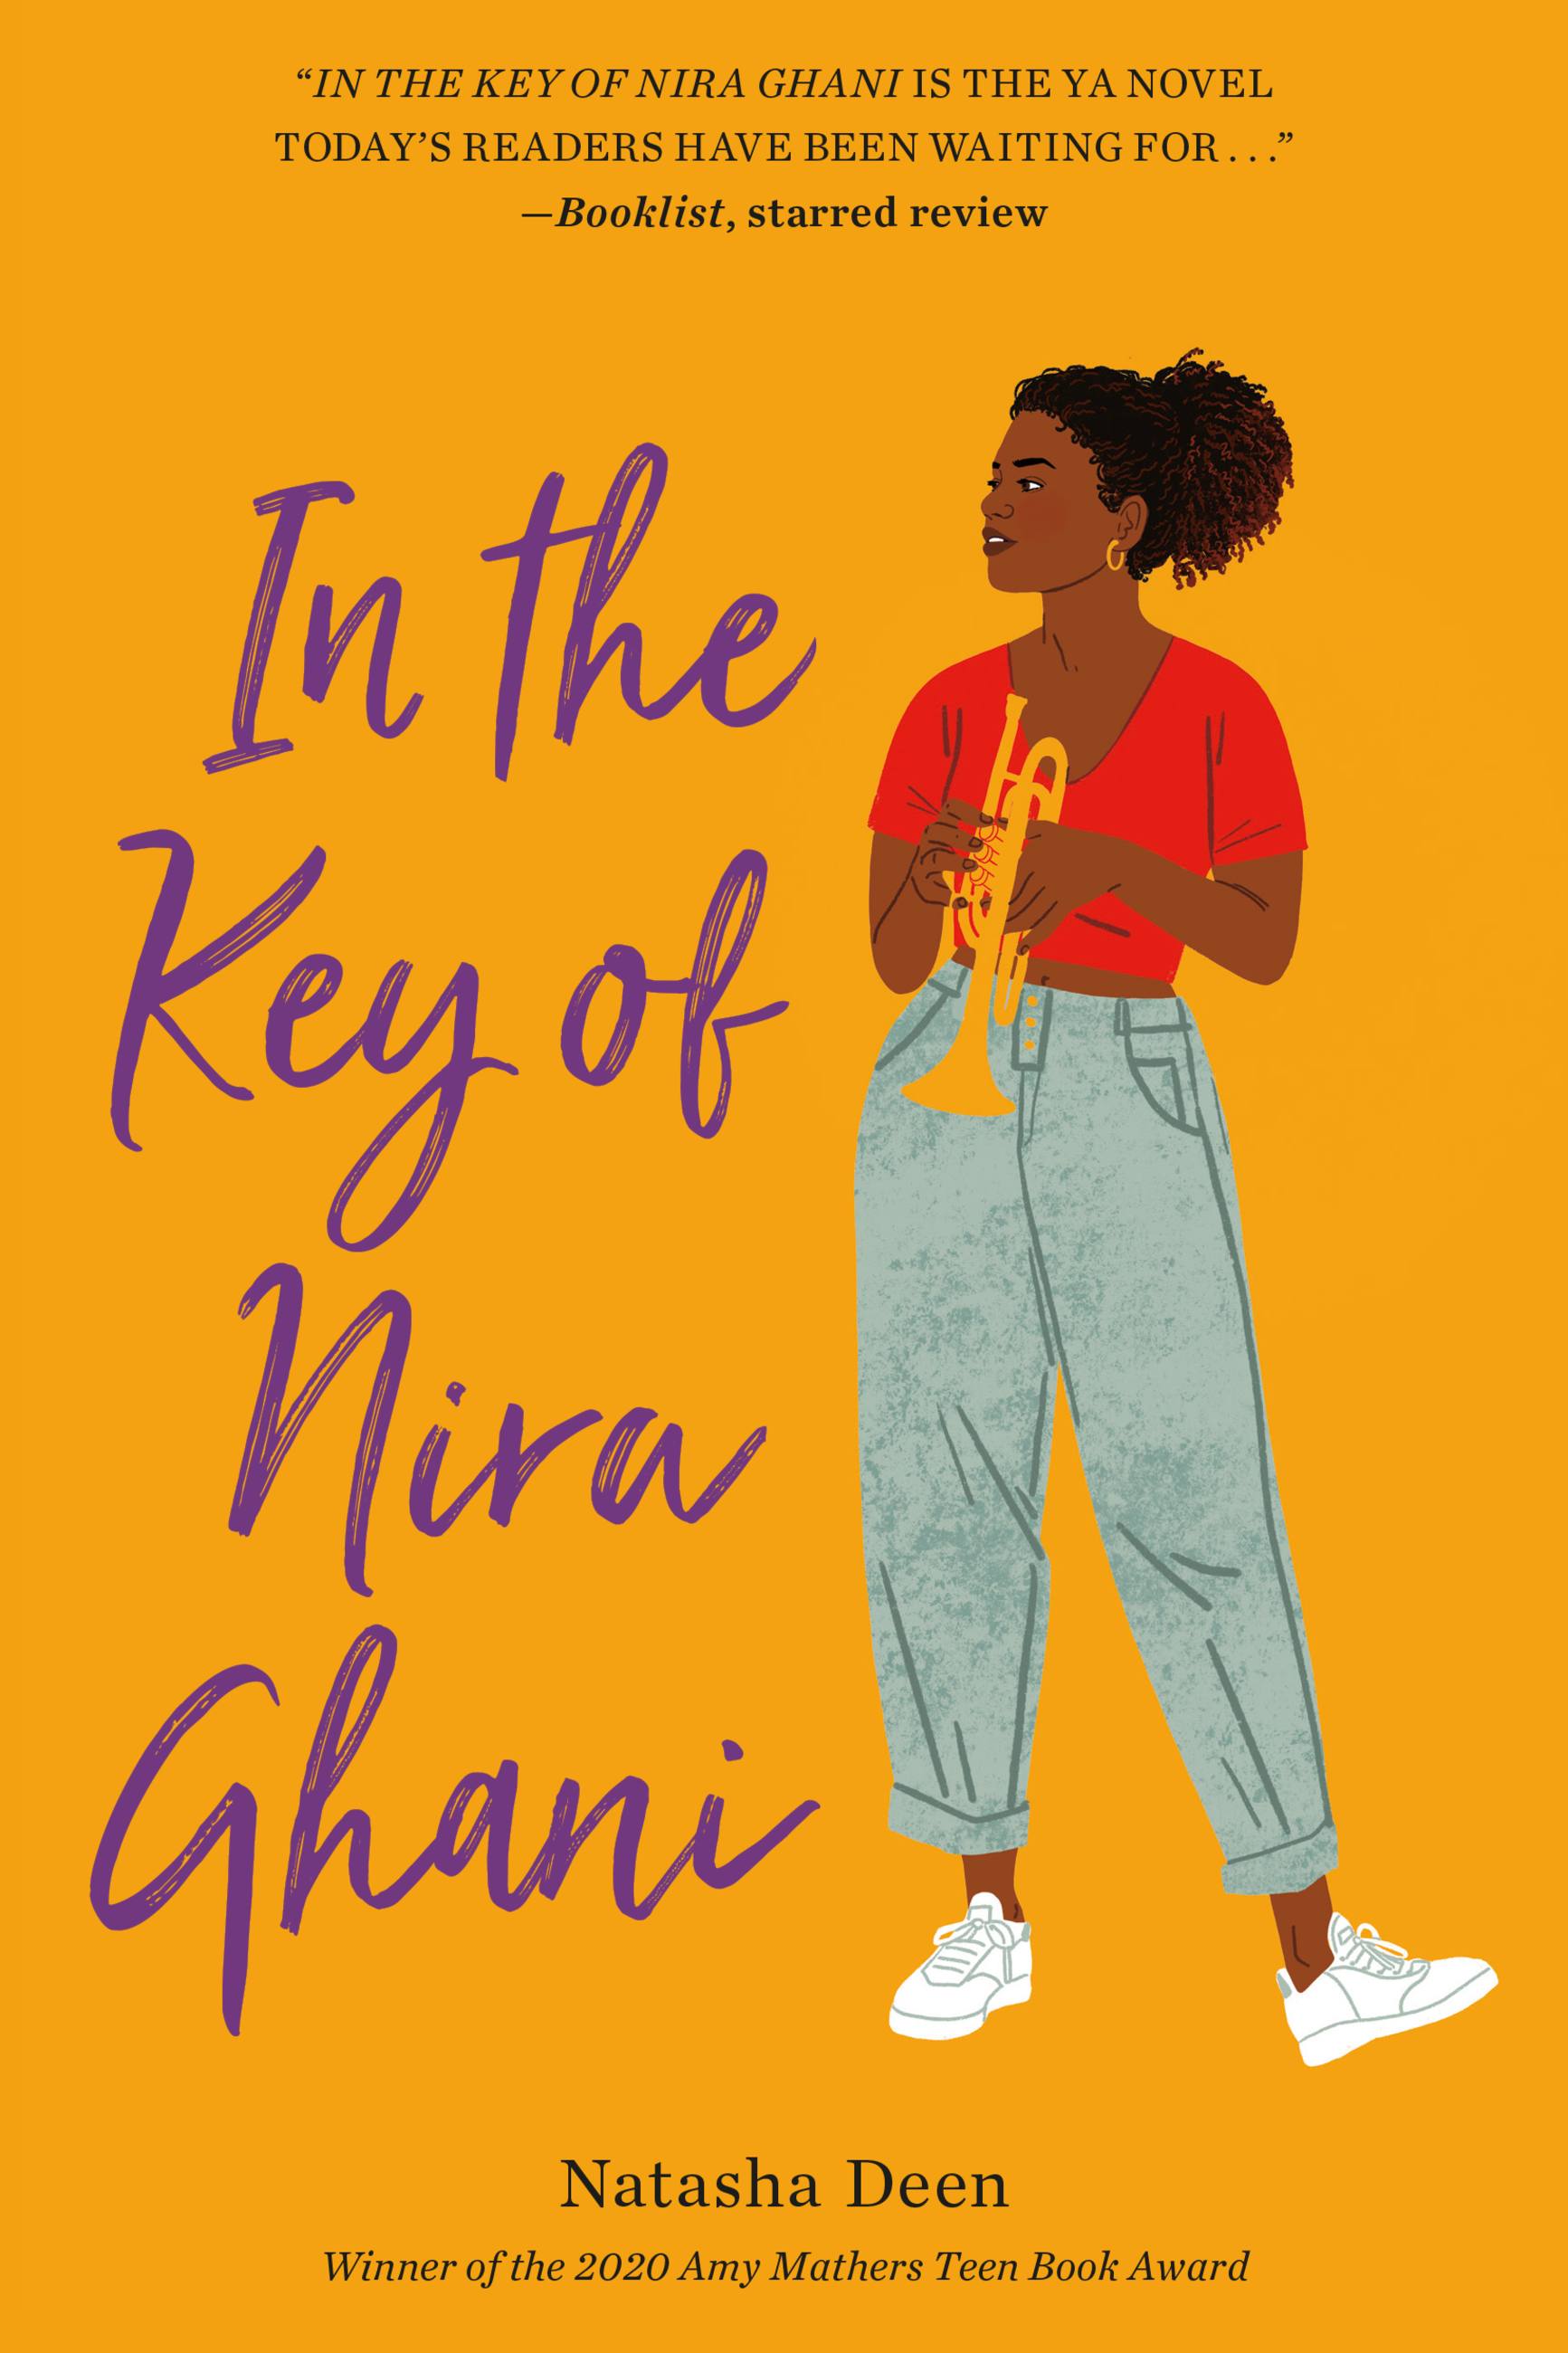 Key　Hachette　Natasha　by　of　Ghani　Nira　the　Book　Group　In　Deen